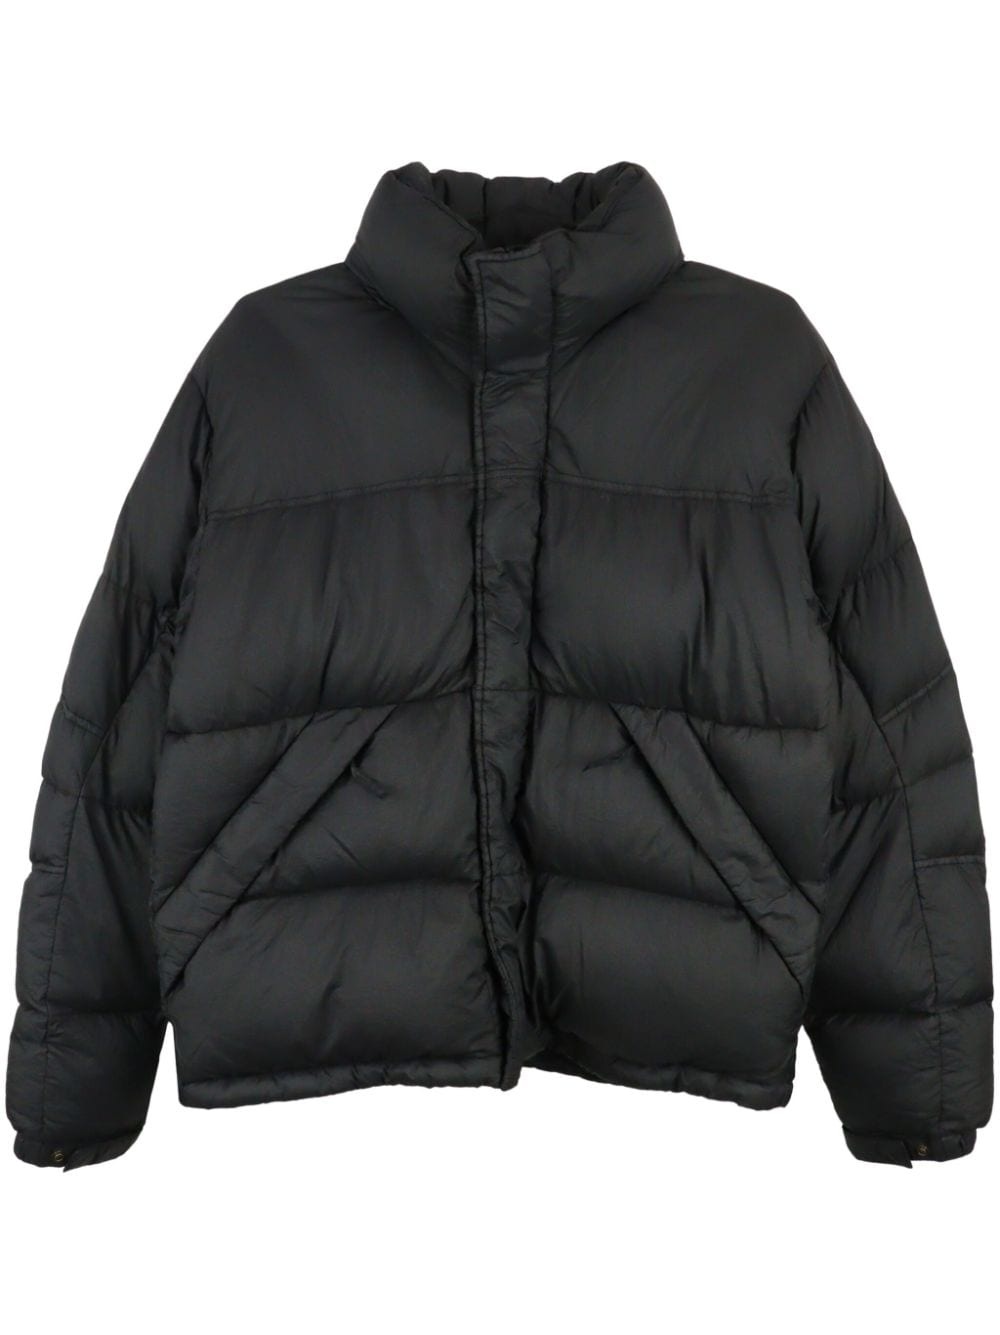 Aspen padded jacket - 1